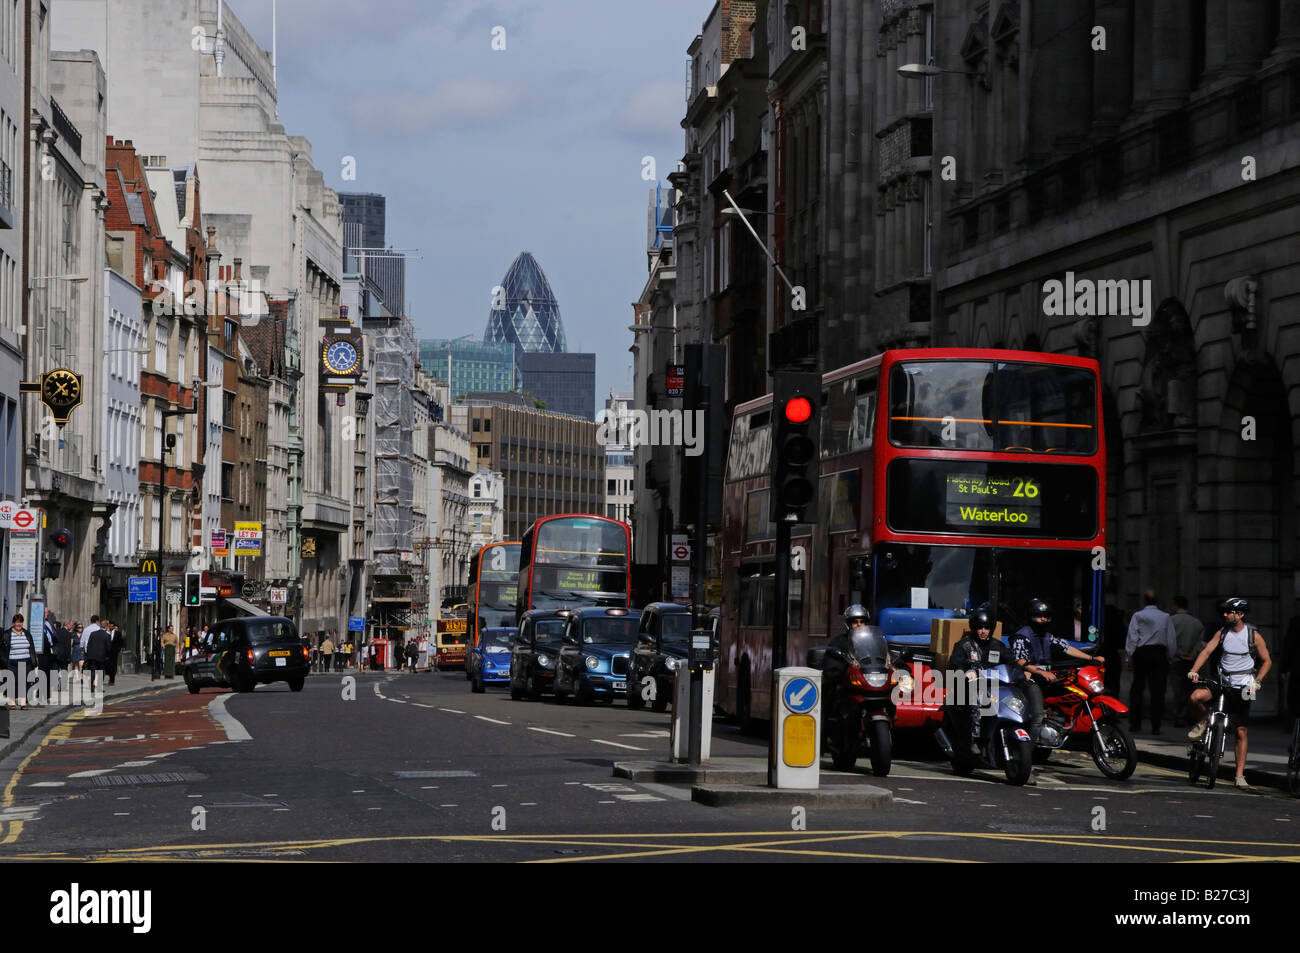 Fleet Street London Stockfotografie - Alamy